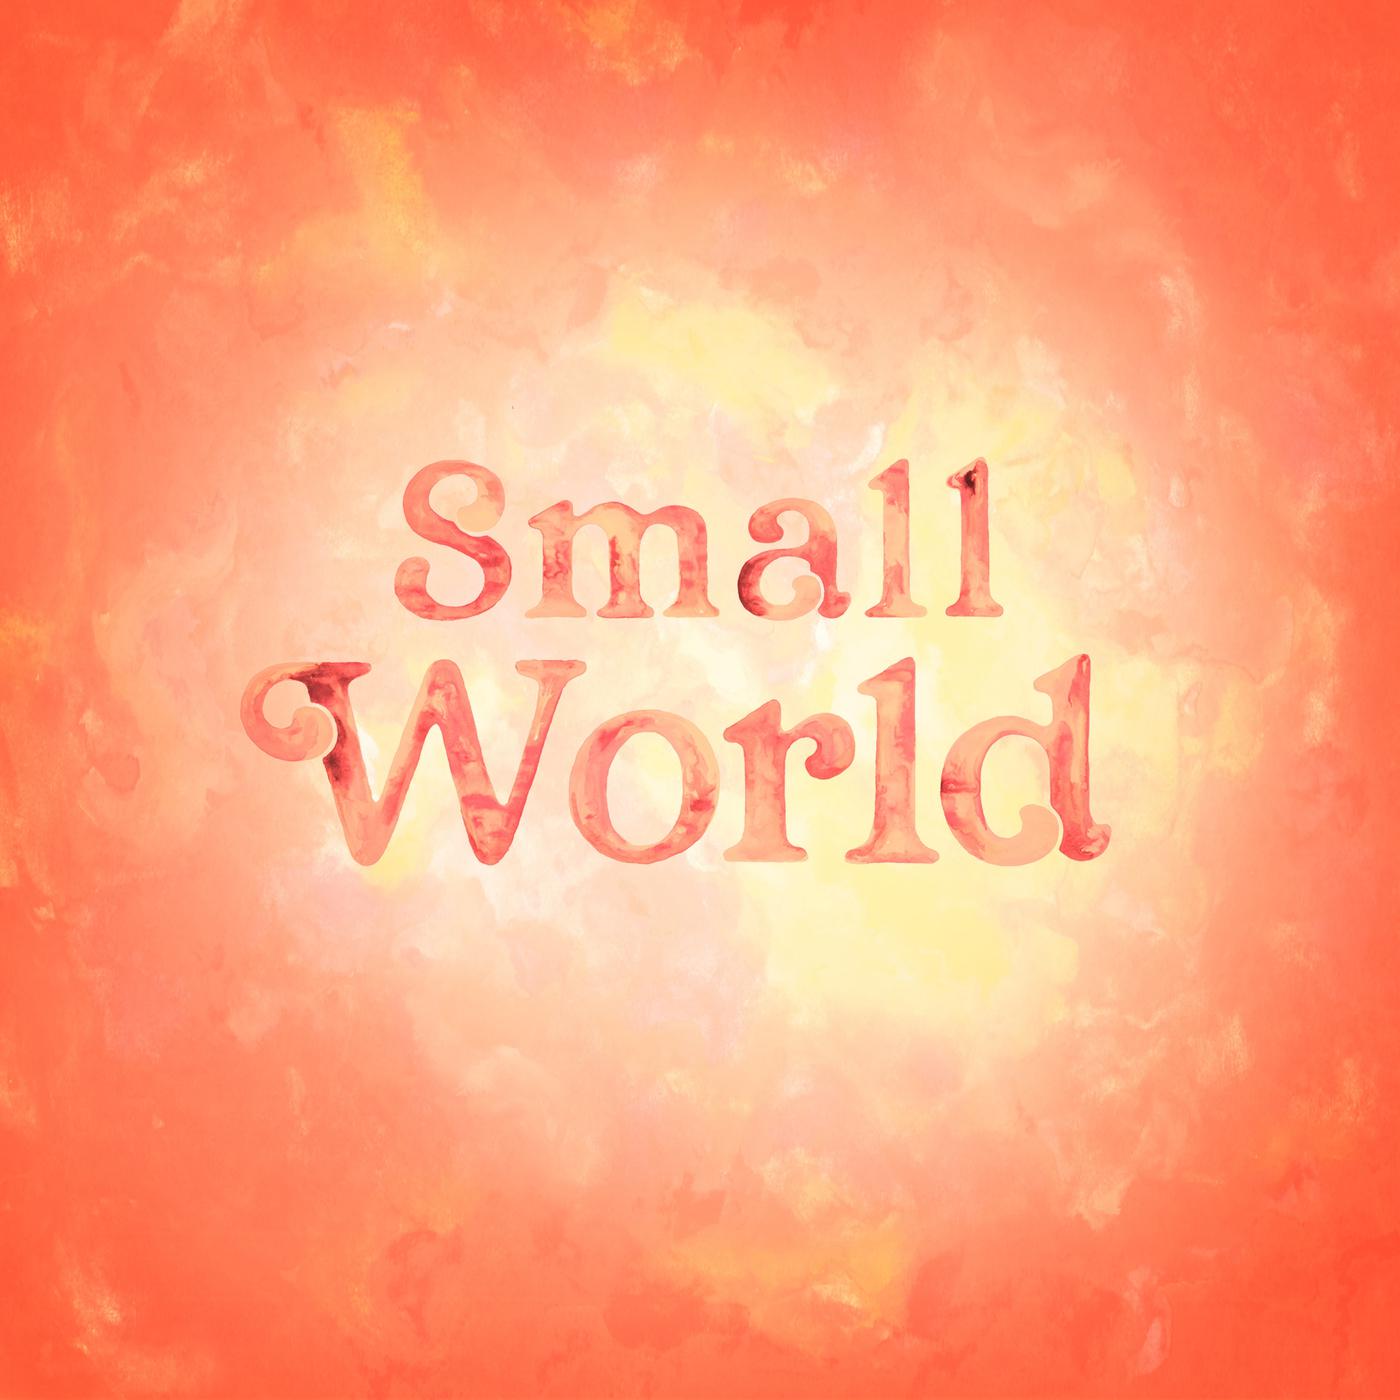 Small world歌词 歌手BUMP OF CHICKEN-专辑Small world-单曲《Small world》LRC歌词下载